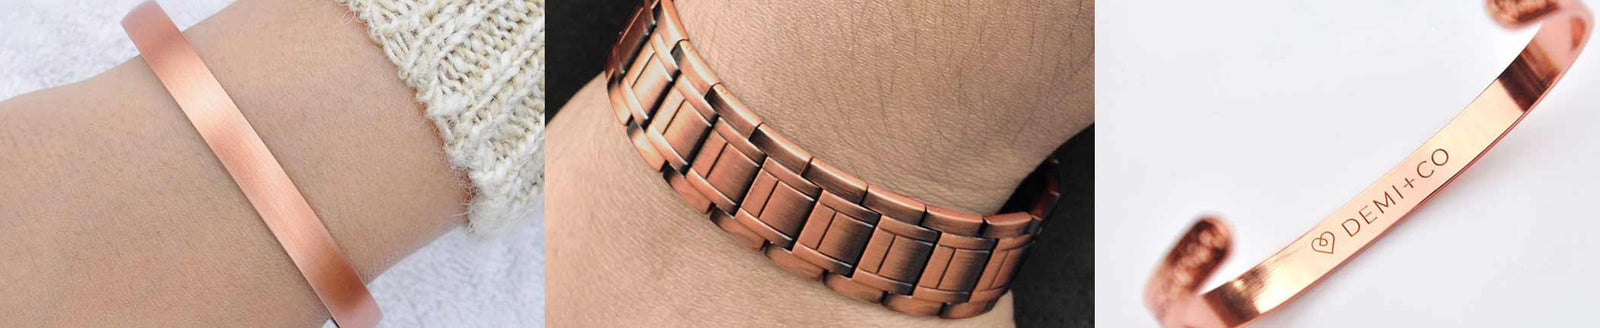 Copper bracelet no magnets, non magnetic bands - DEMI+CO - DEMI+CO Jewellery